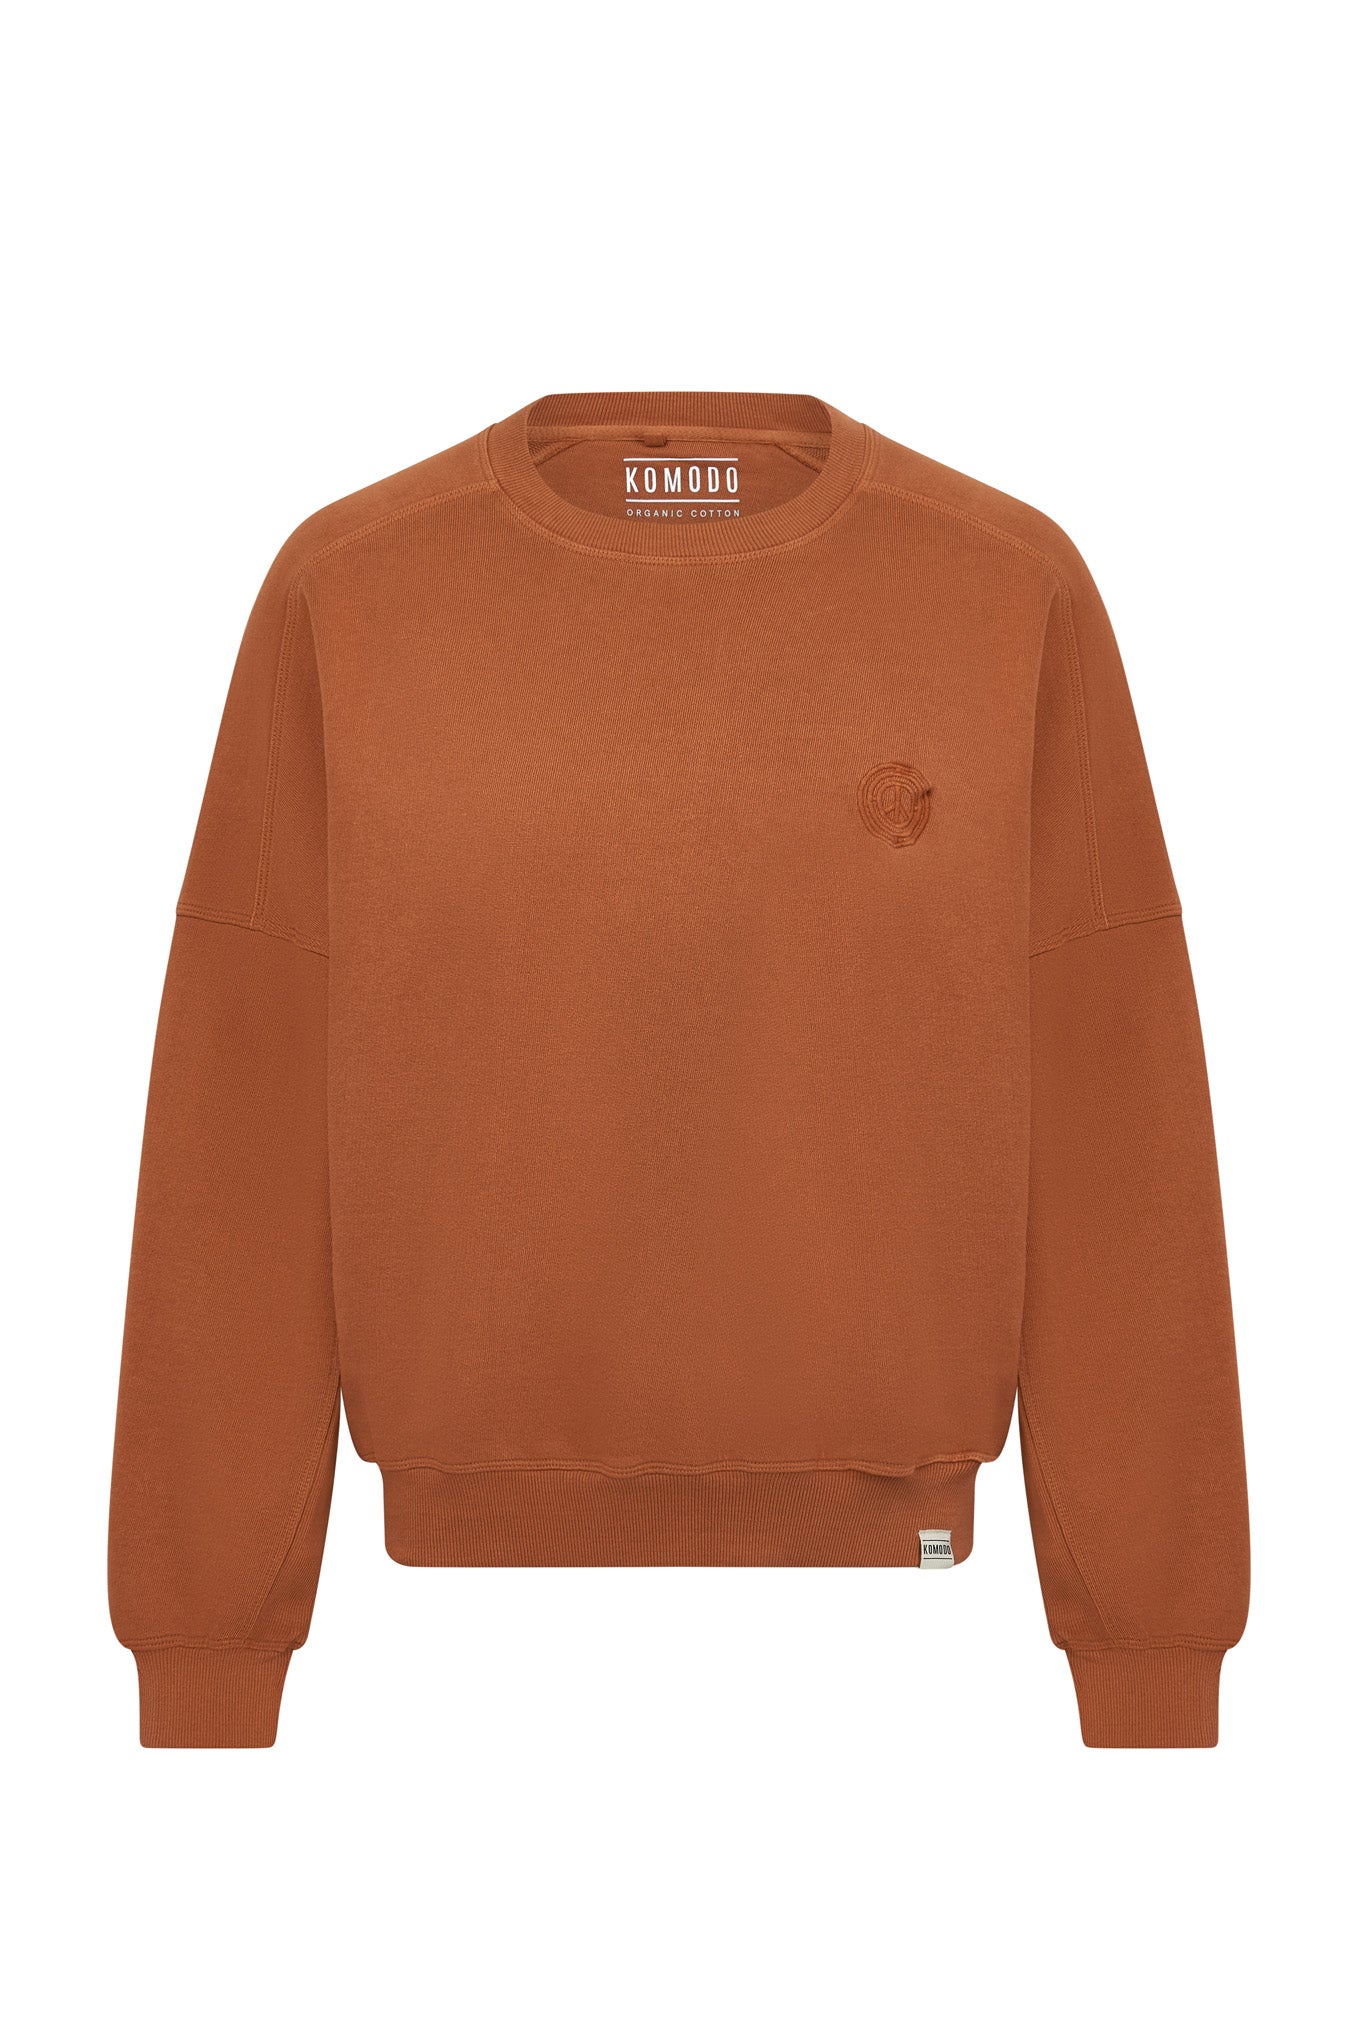 Dark orange sweater DAWN made of organic cotton by Komodo